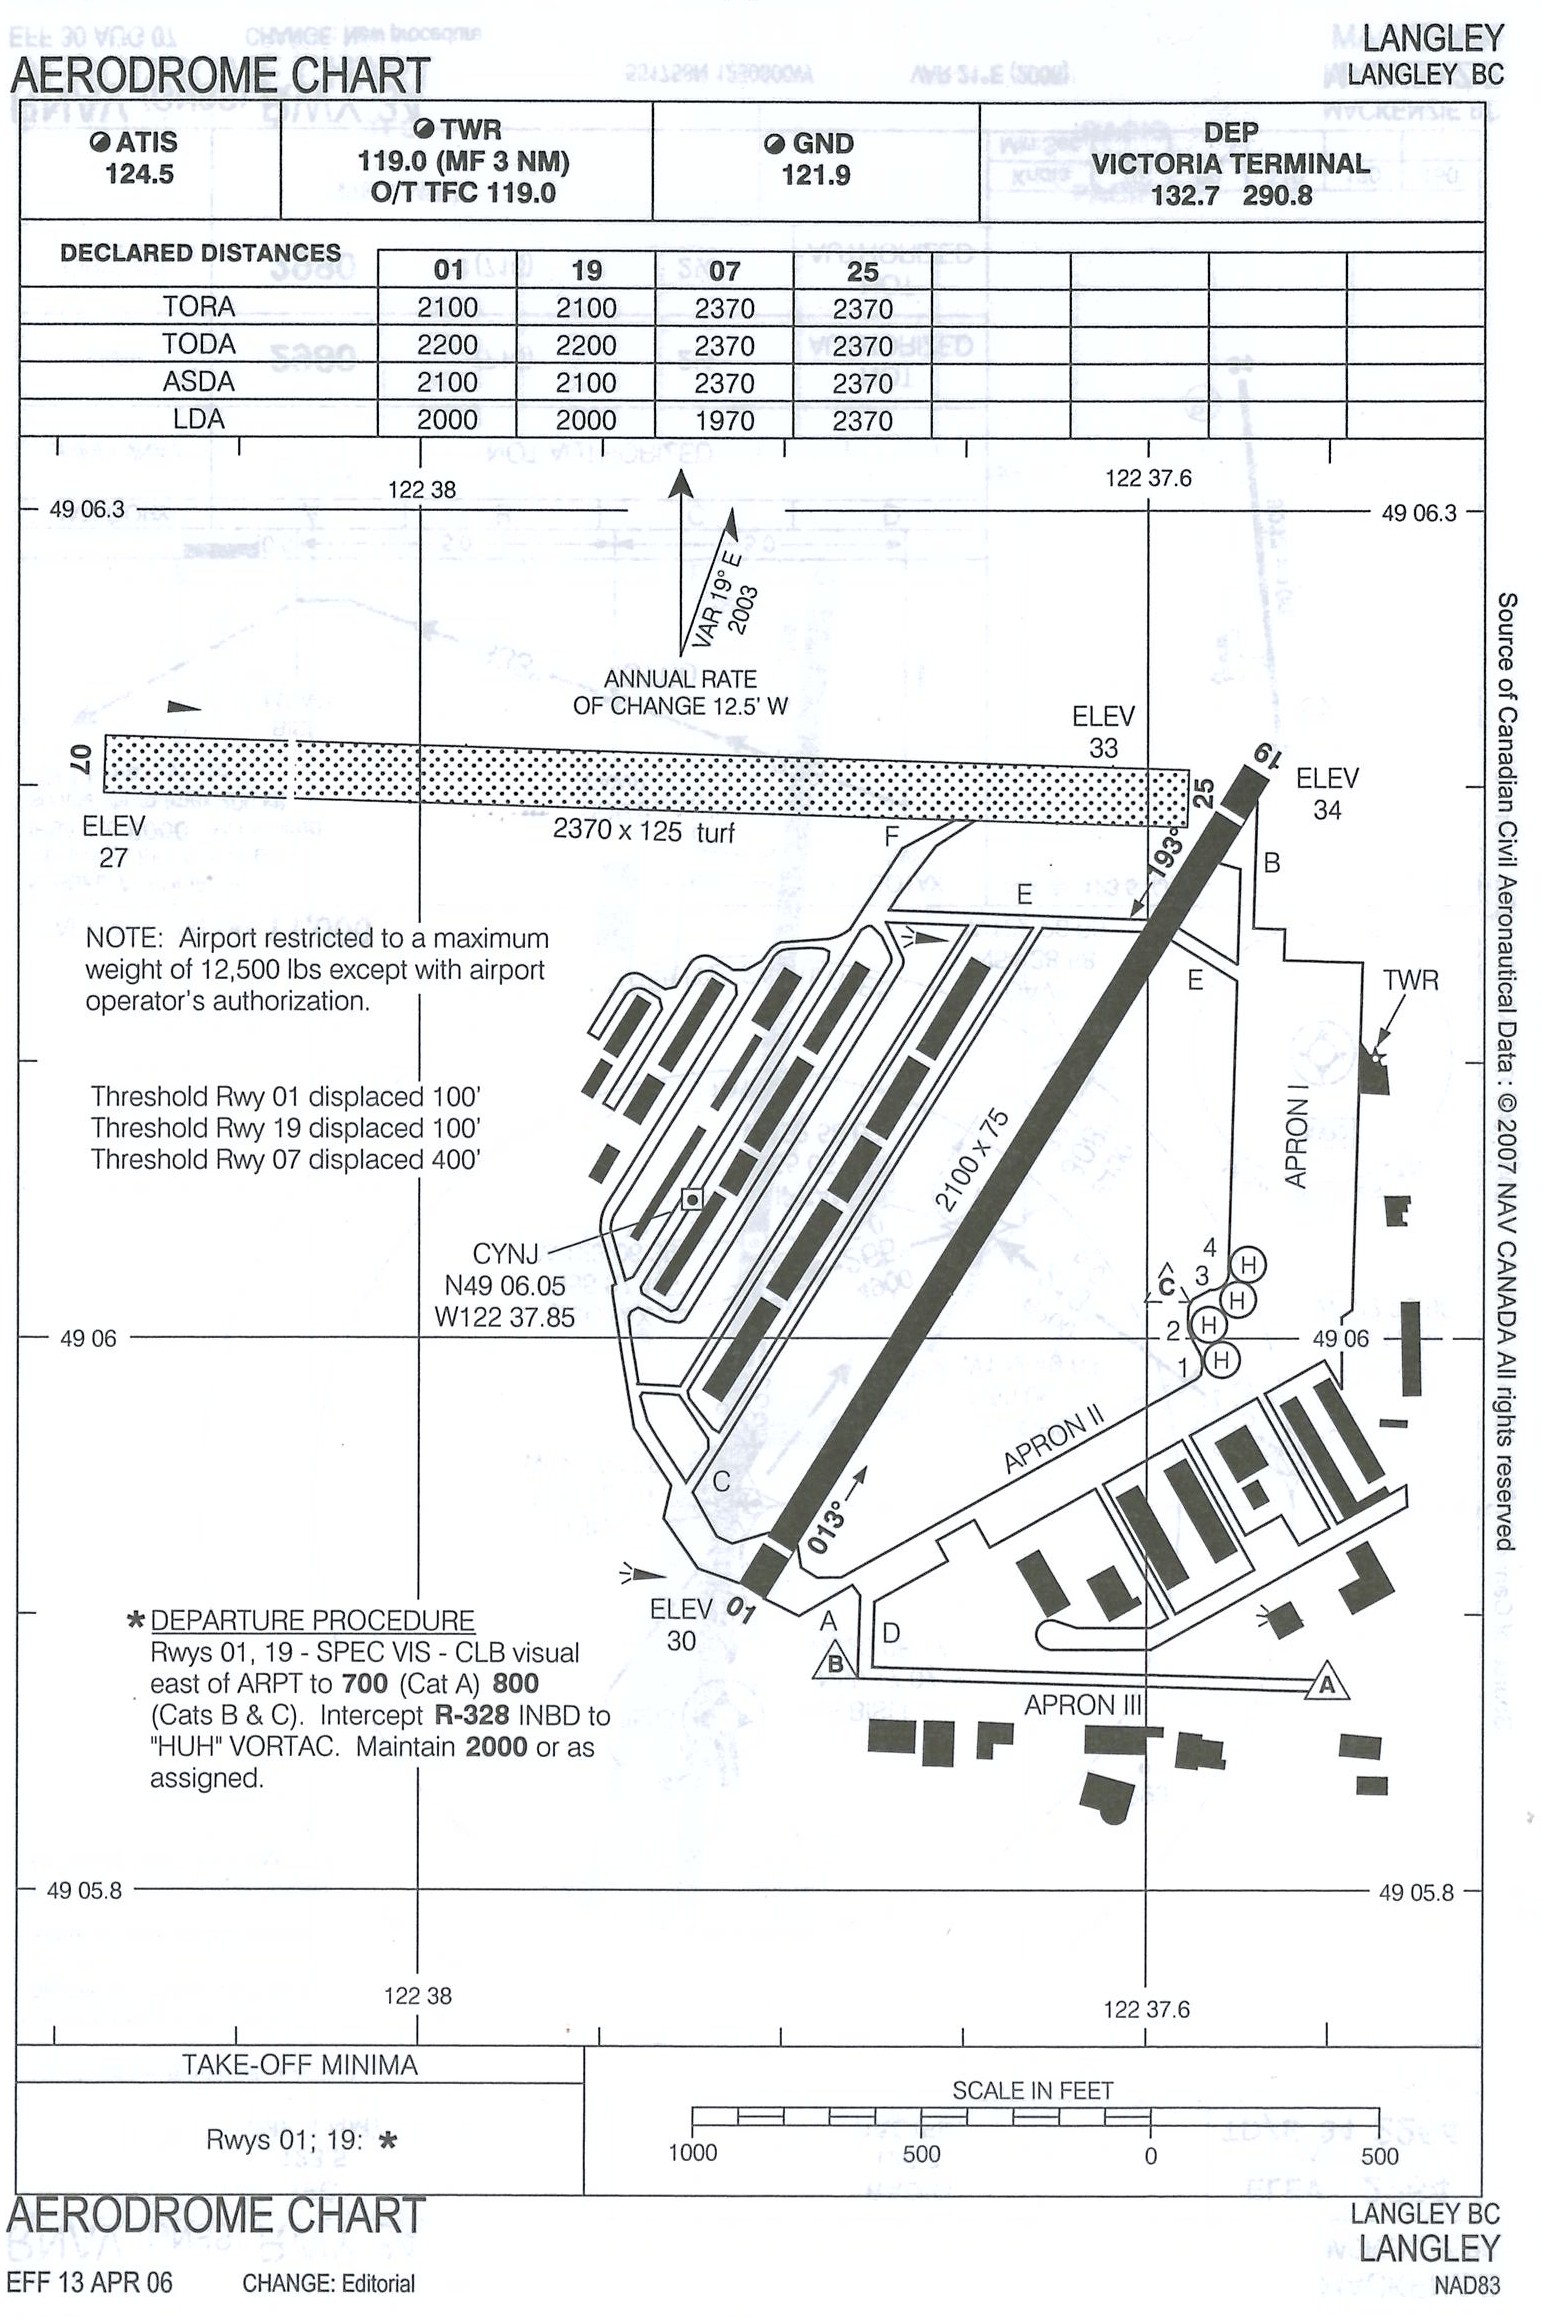 Aerodrome Chart, Langley Airport